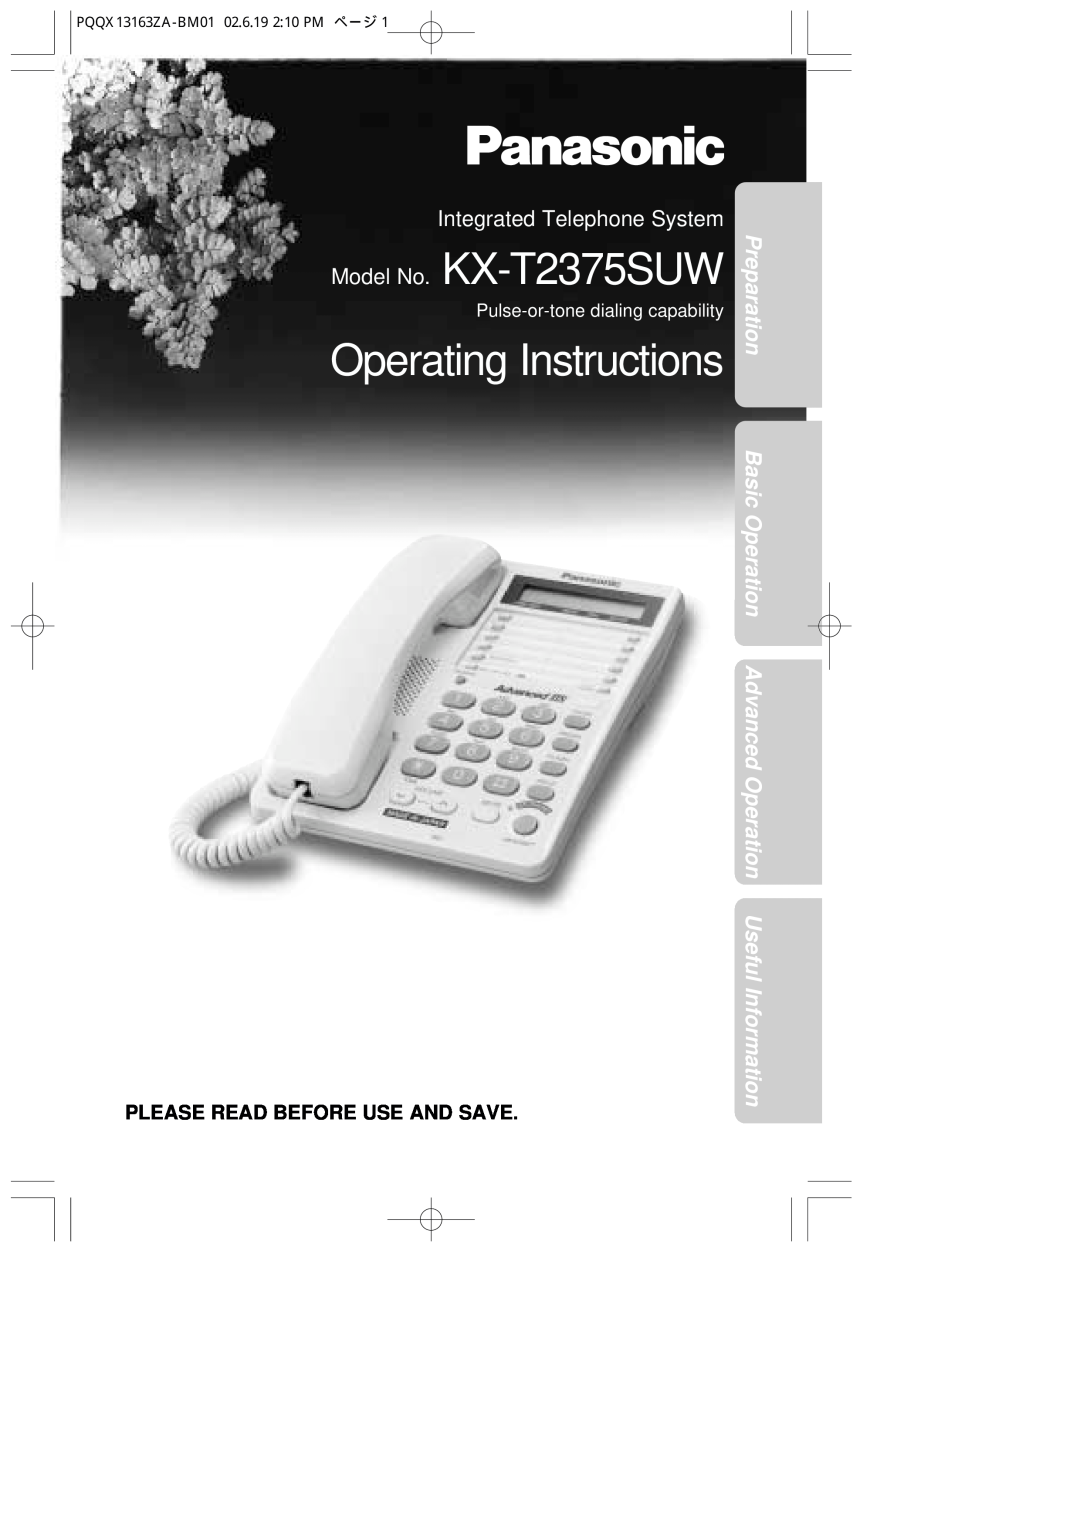 Panasonic KX-T2375SUW operating instructions Preparation, Basic Operation Advanced Operation Useful Information 